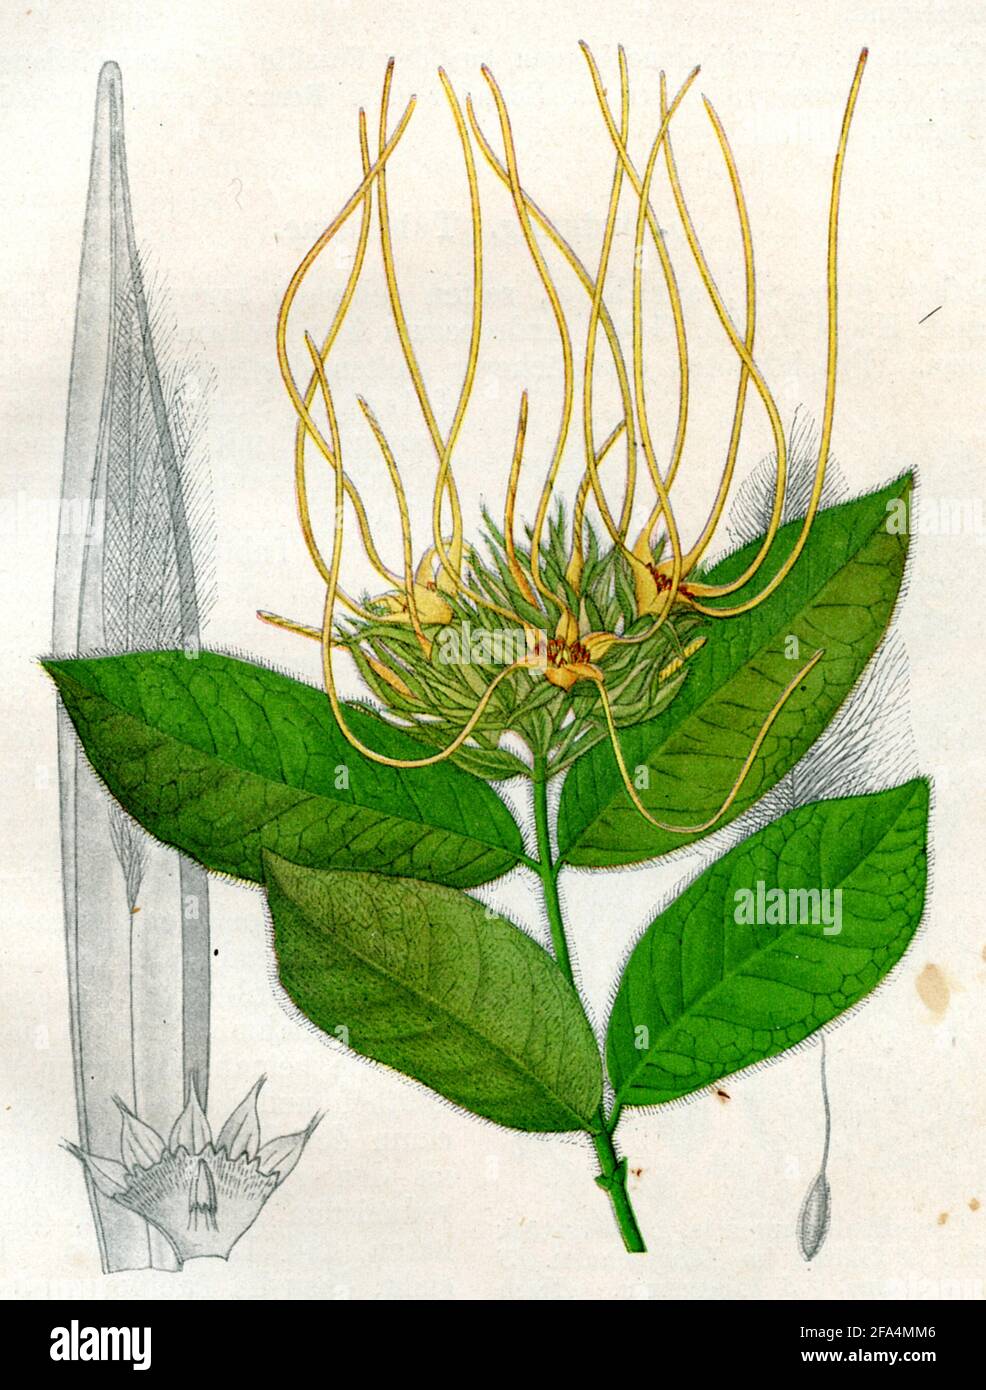 hispid strophanthus / Strophanthus hispidus / Strophanthus hispidus / botany book, 1900) Stock Photo